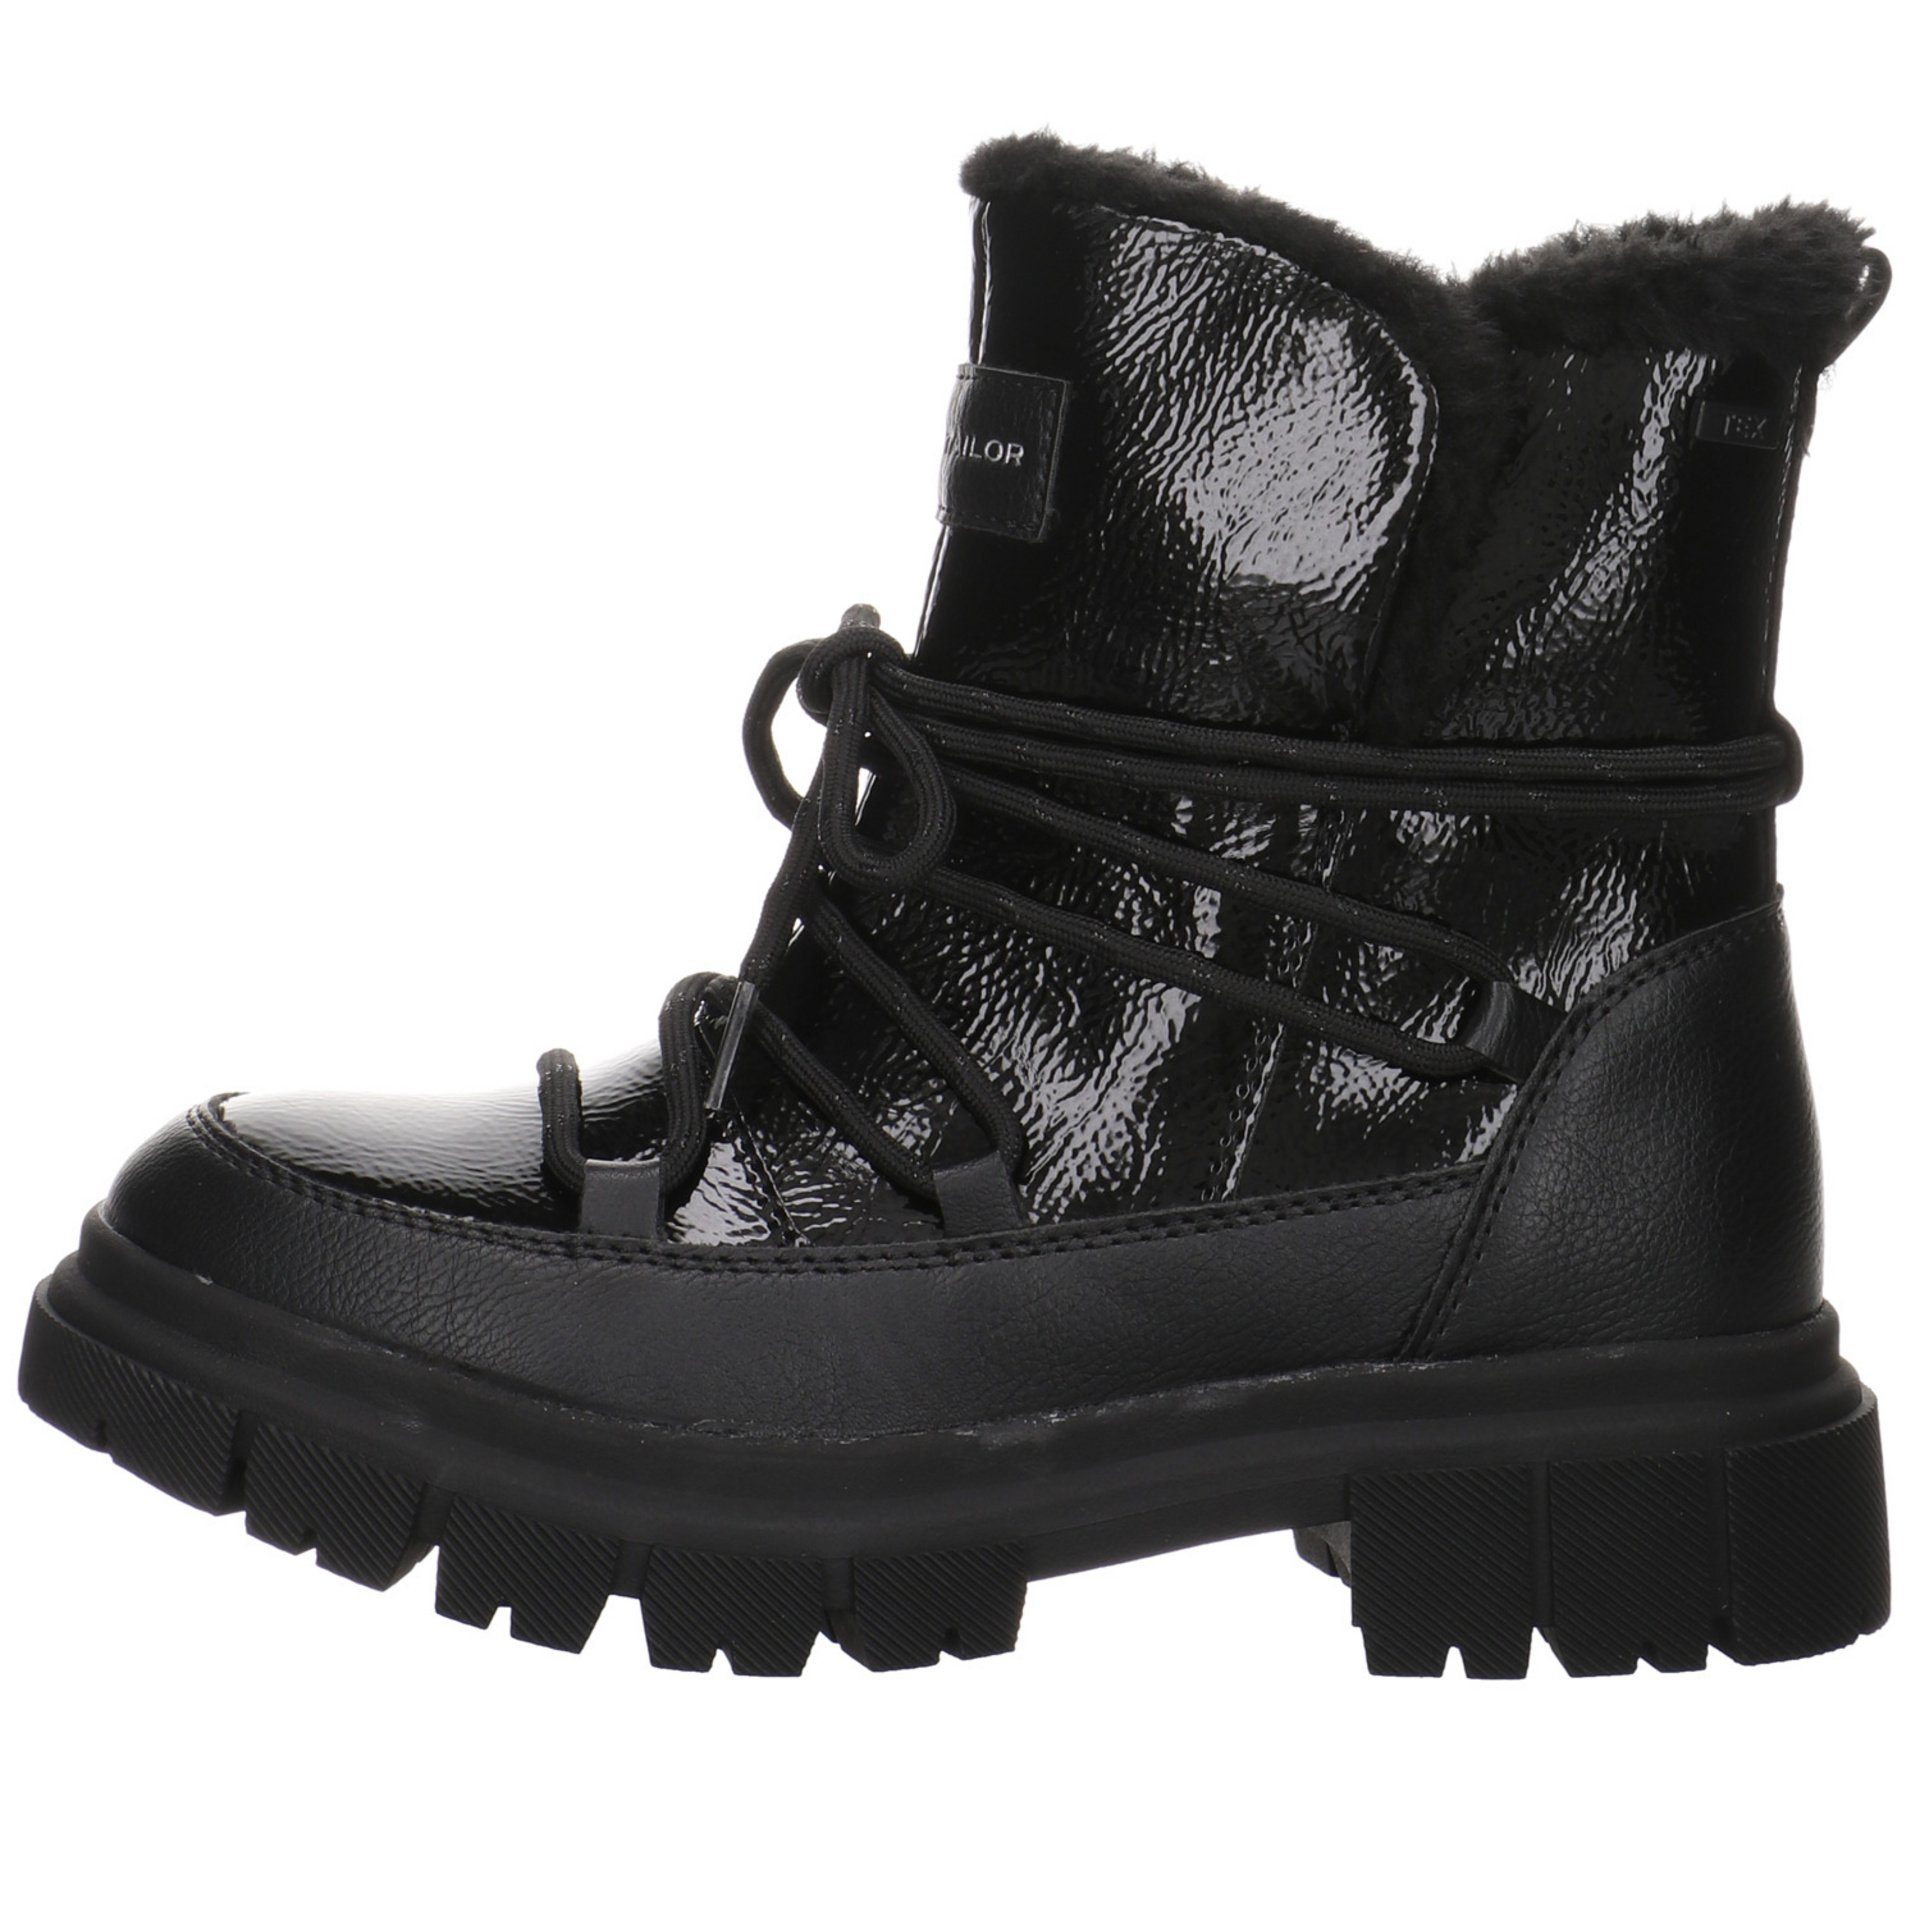 Boots Stiefel Mädchen TAILOR Schuhe black Stiefelette TOM Synthetikkombination Kinderschuhe